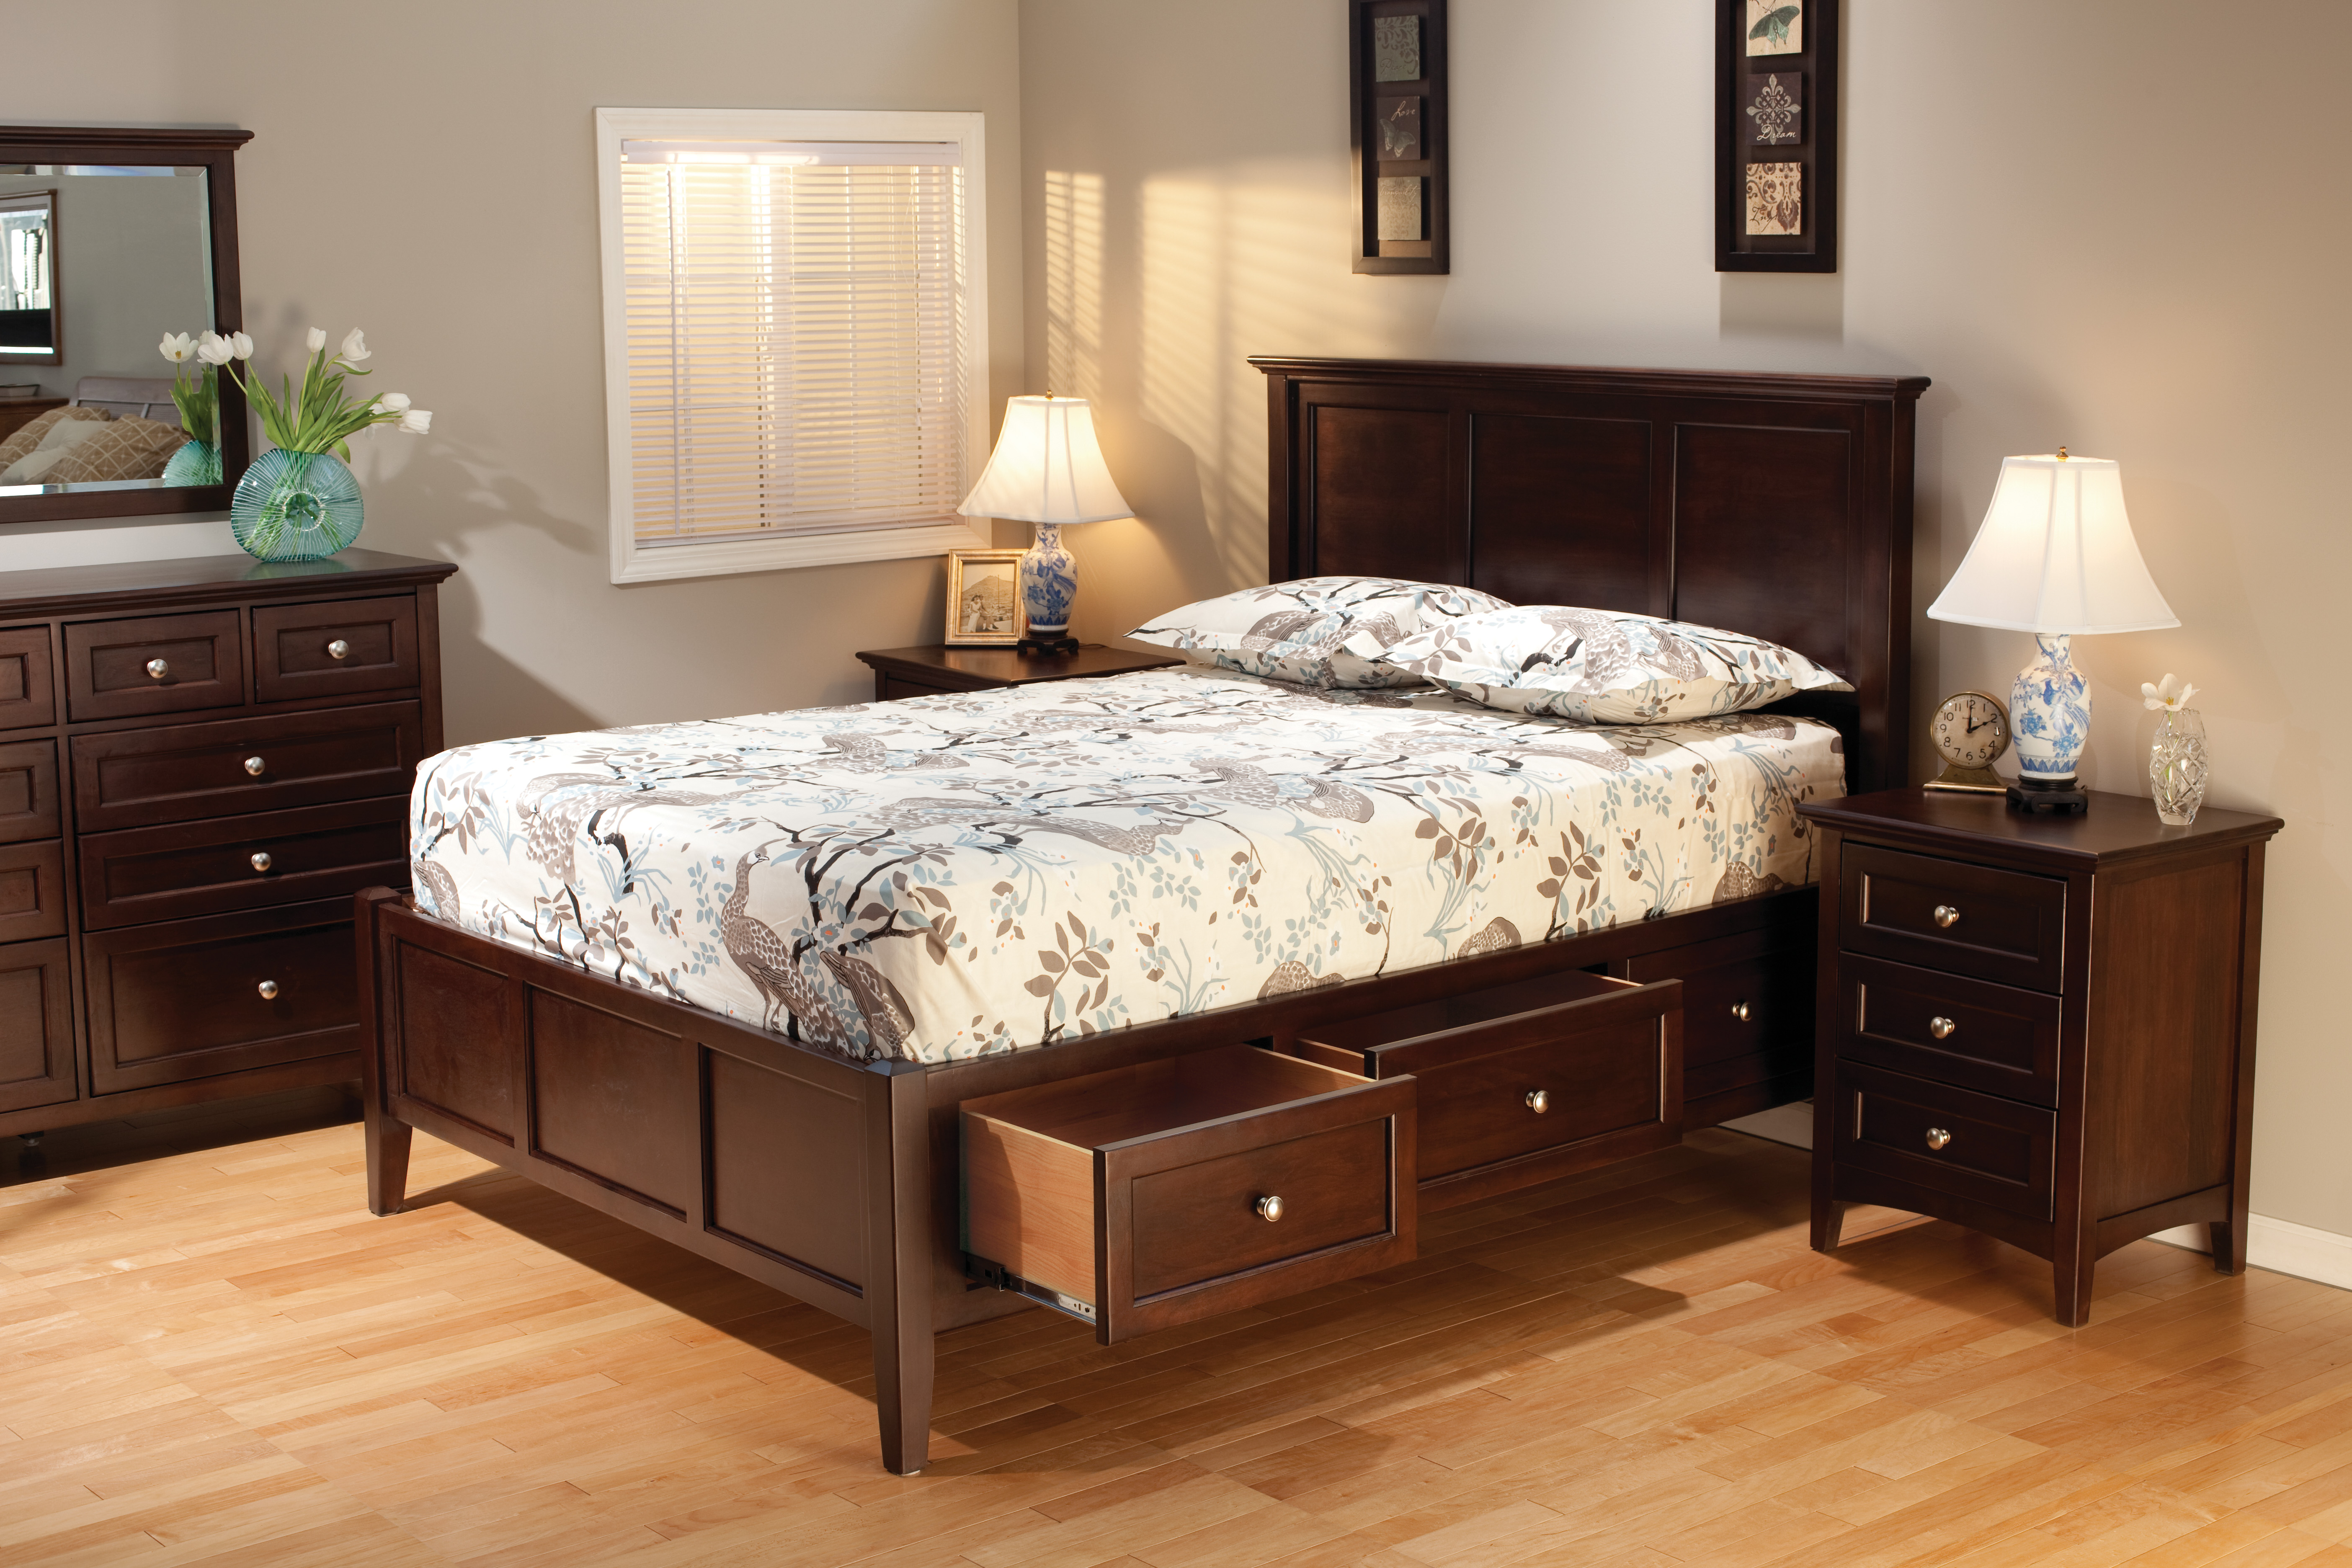 simple wood bedroom furniture